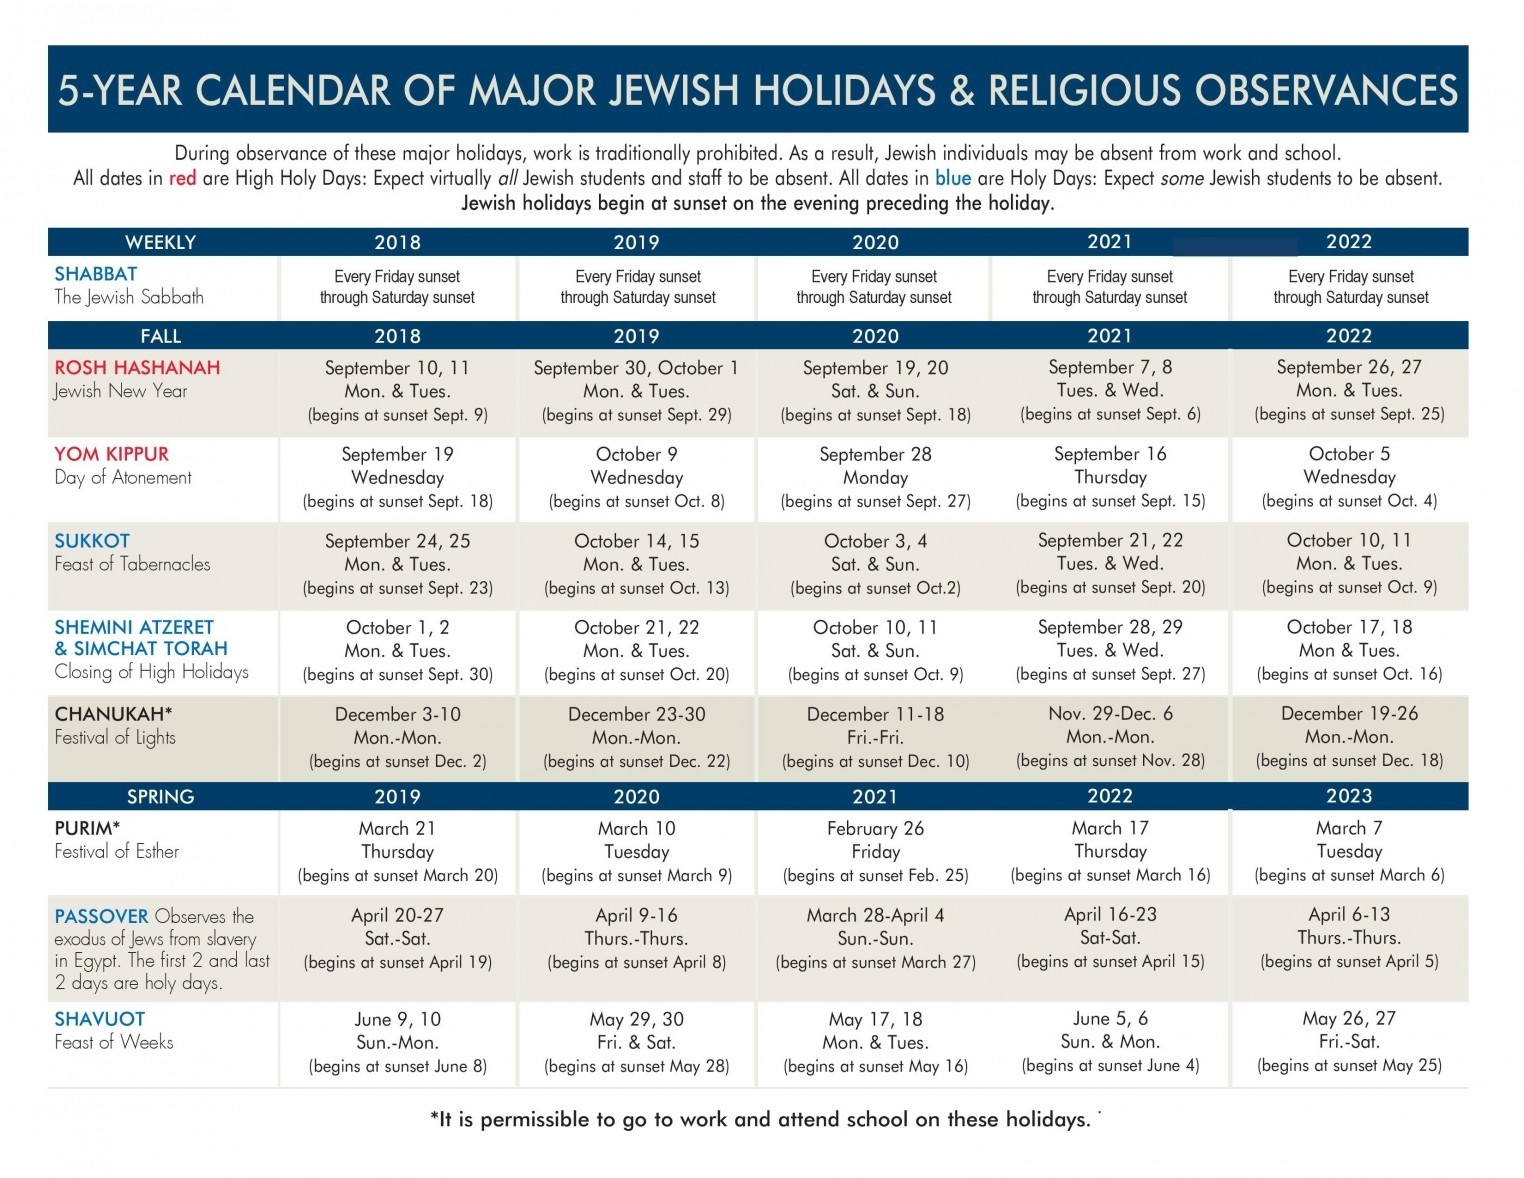 5-Year Jewish Holiday Calendar | Jewish Federation Of-2021 Jewish Holidays Calendar